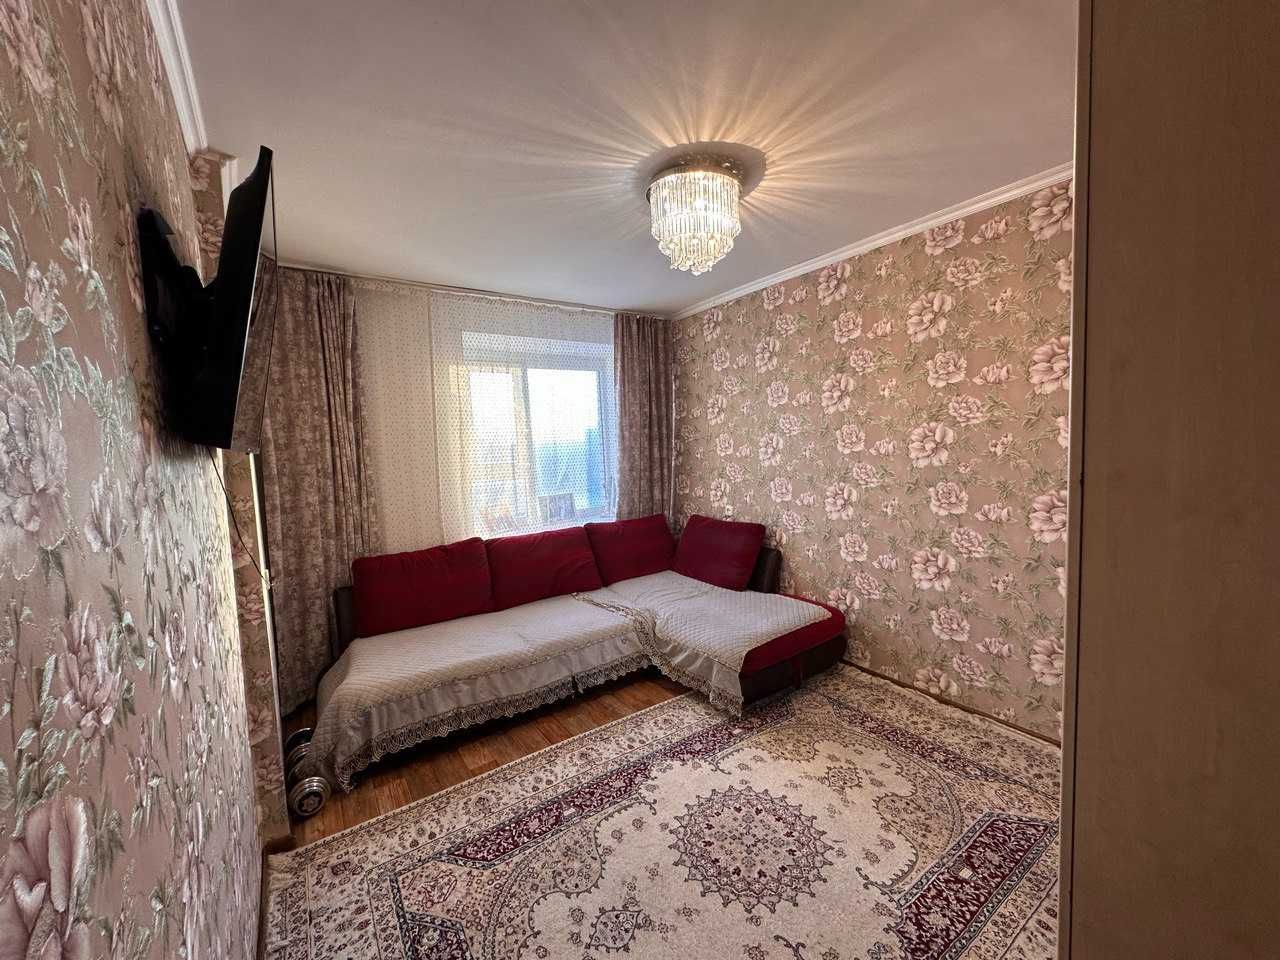 Продается 2 -х комнатная квартира в районе Универмаг